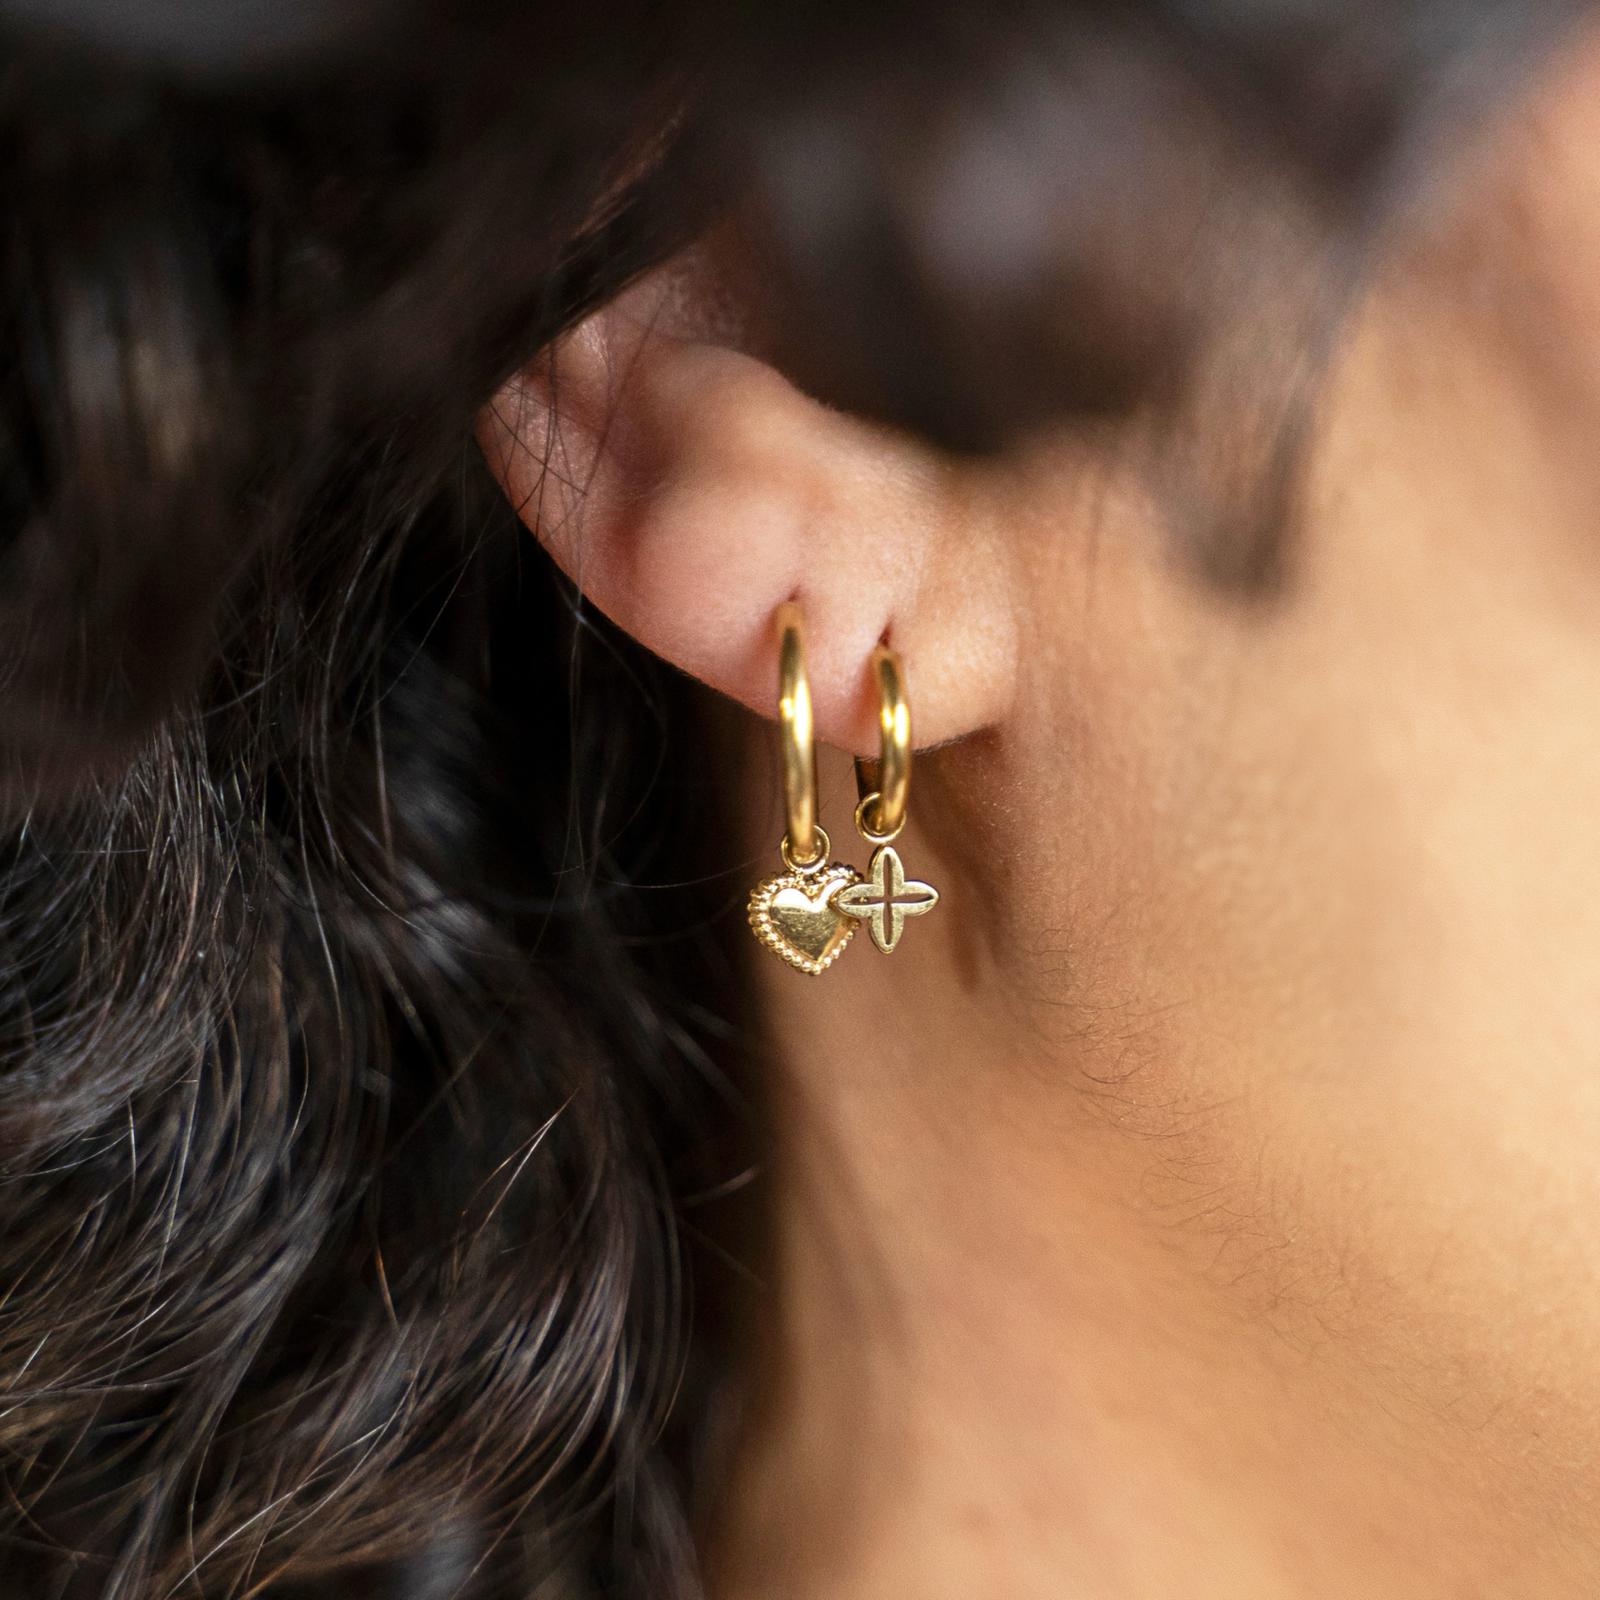 Earrings small with pendant open flower